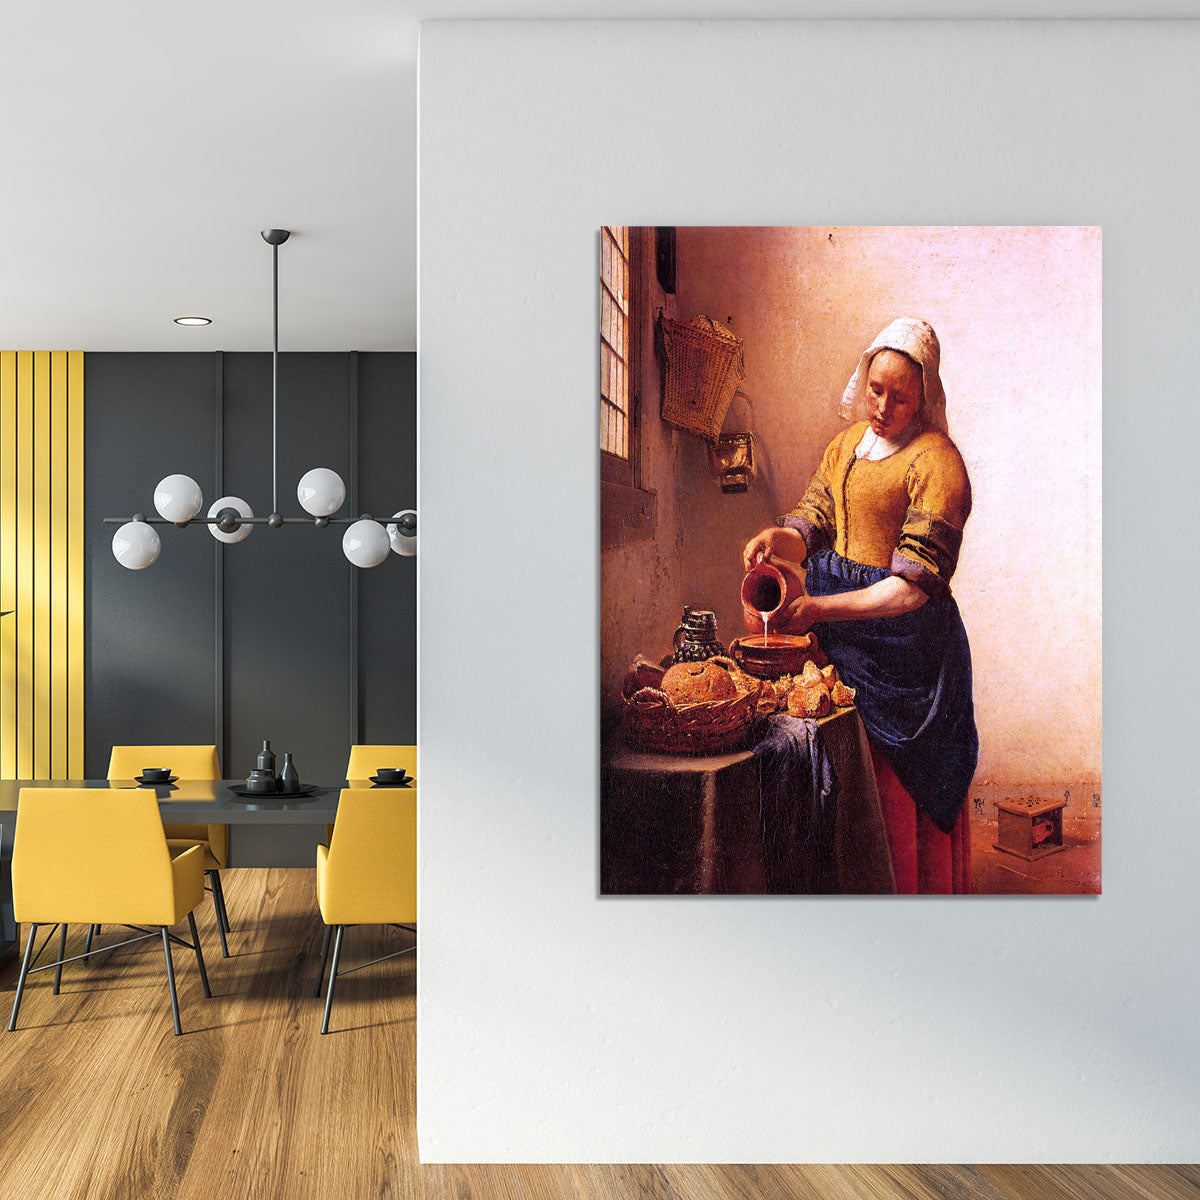 Milk maid by Vermeer Canvas Print or Poster - Canvas Art Rocks - 4